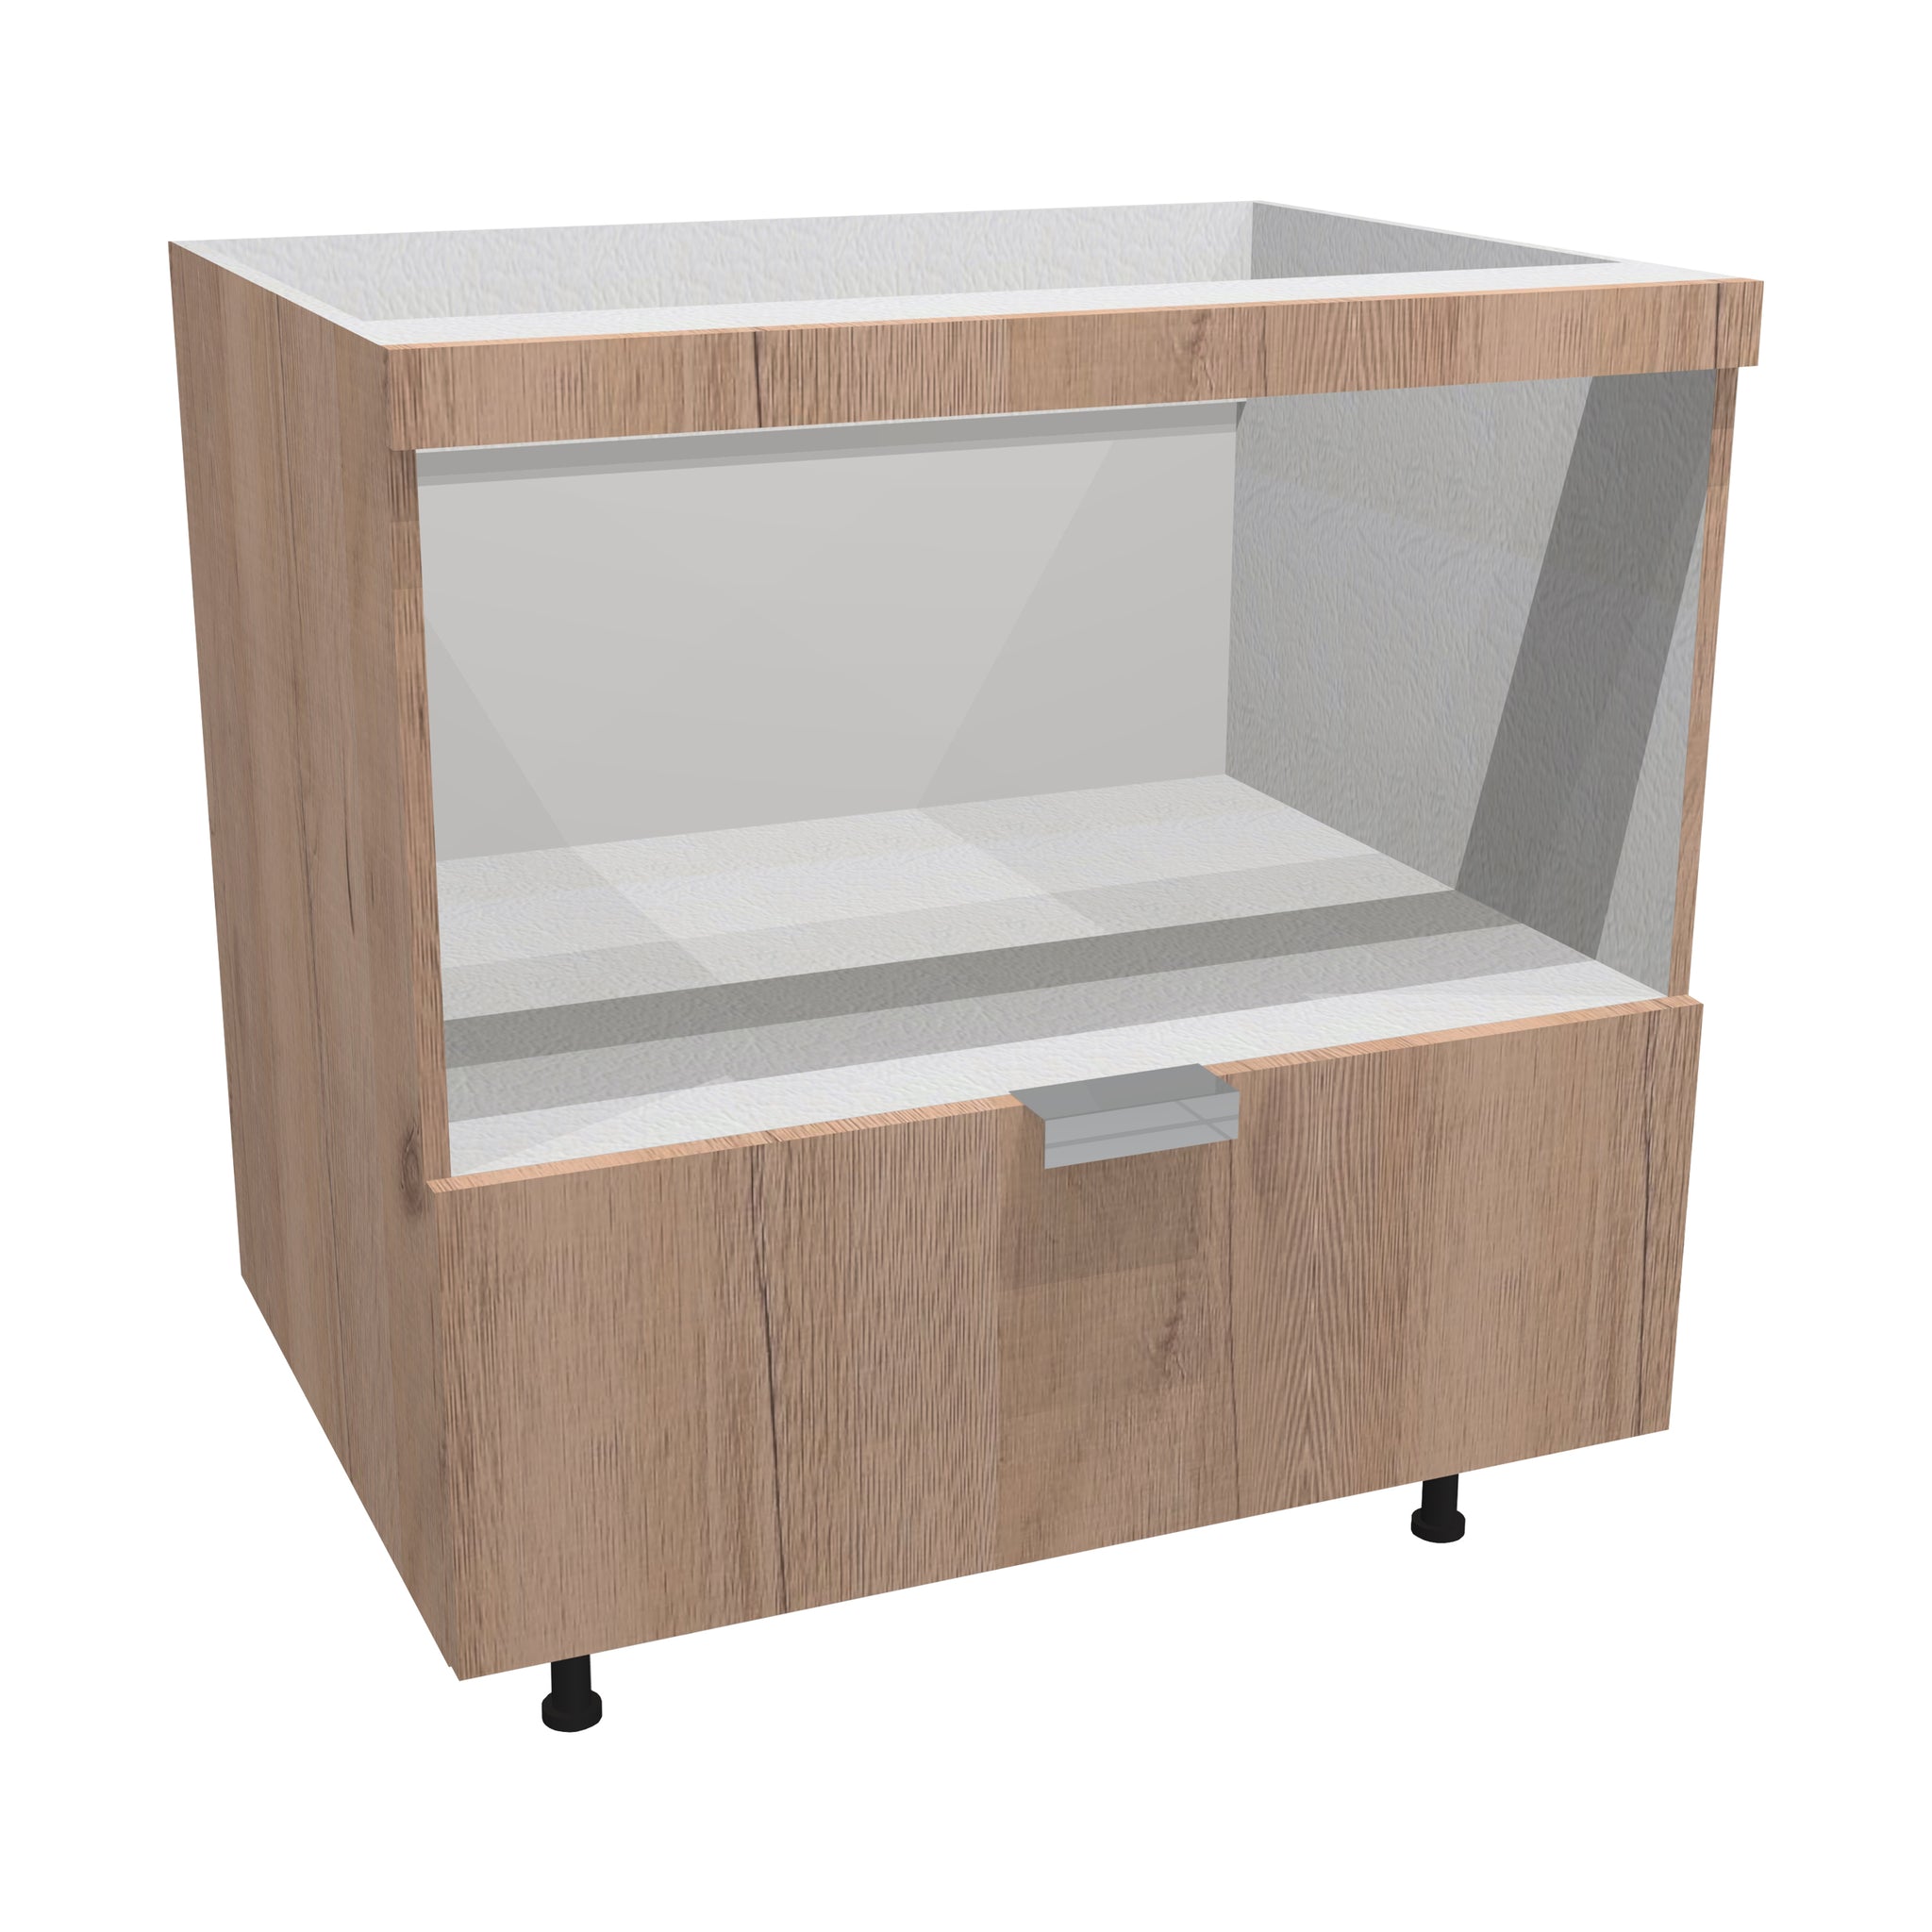 RTA - Rustic Oak - Base Microwave Cabinet | 30"W x 34.5"H x 24"D